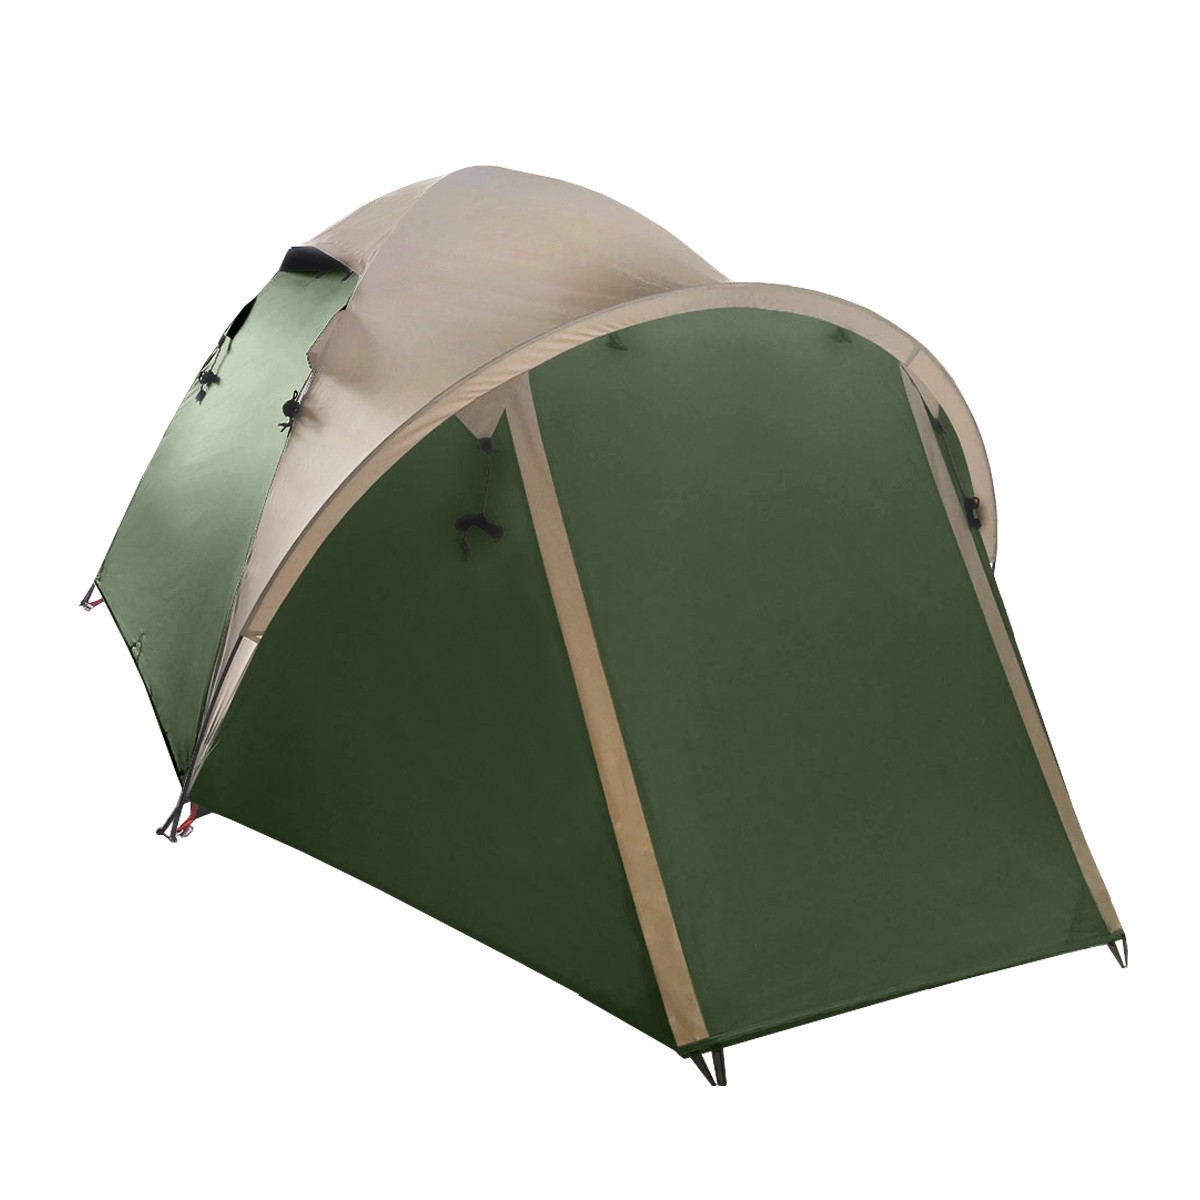 Палатка BTrace Canio 4 зеленый/бежевый